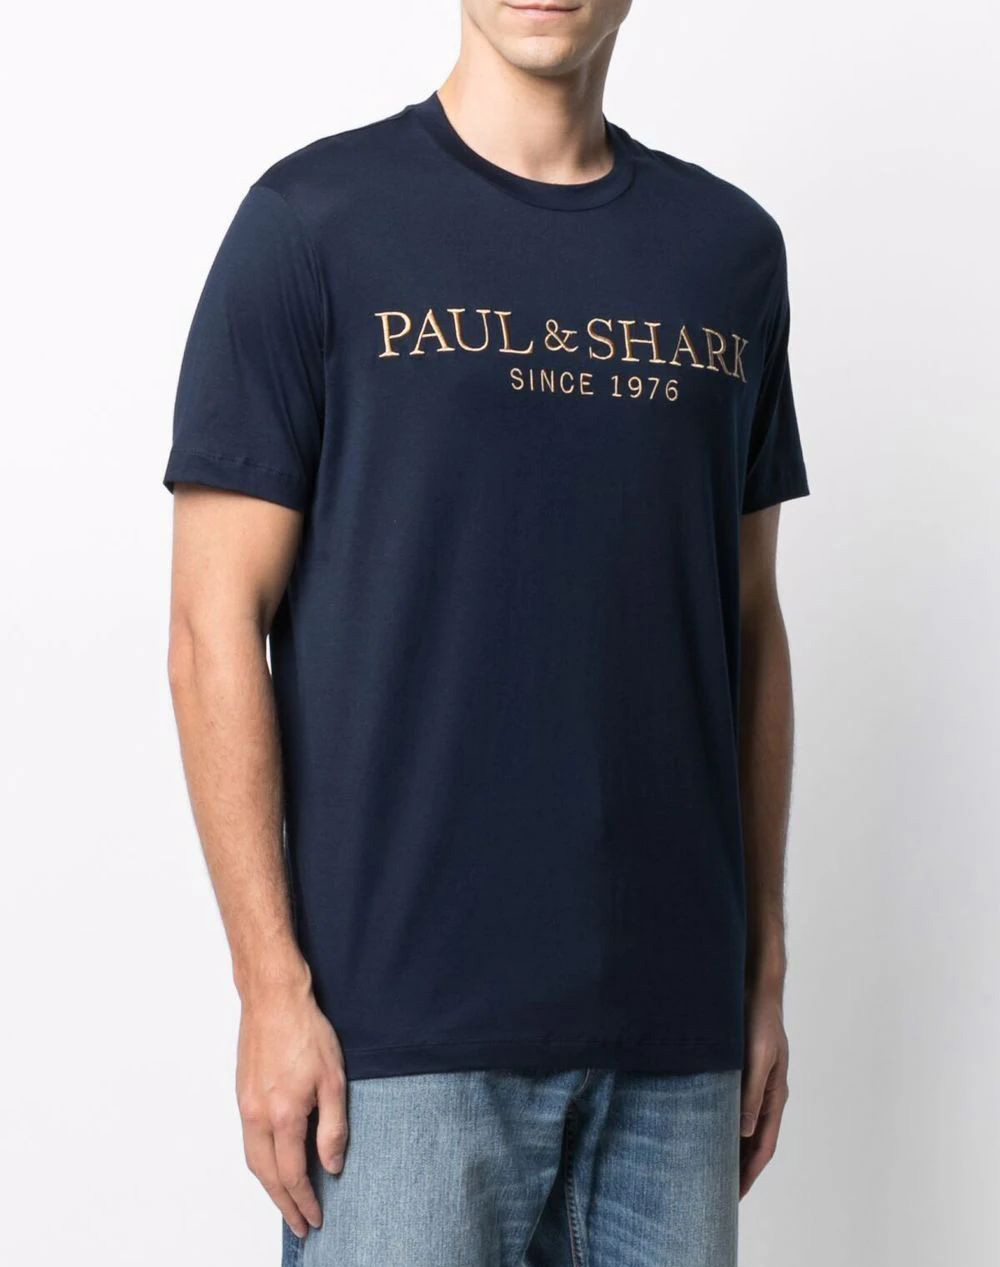 PAUL&SHARK MEN”S KNITTED T-SHIRT 24411020-13 DarkBlue 3820APAUL3400099_8778